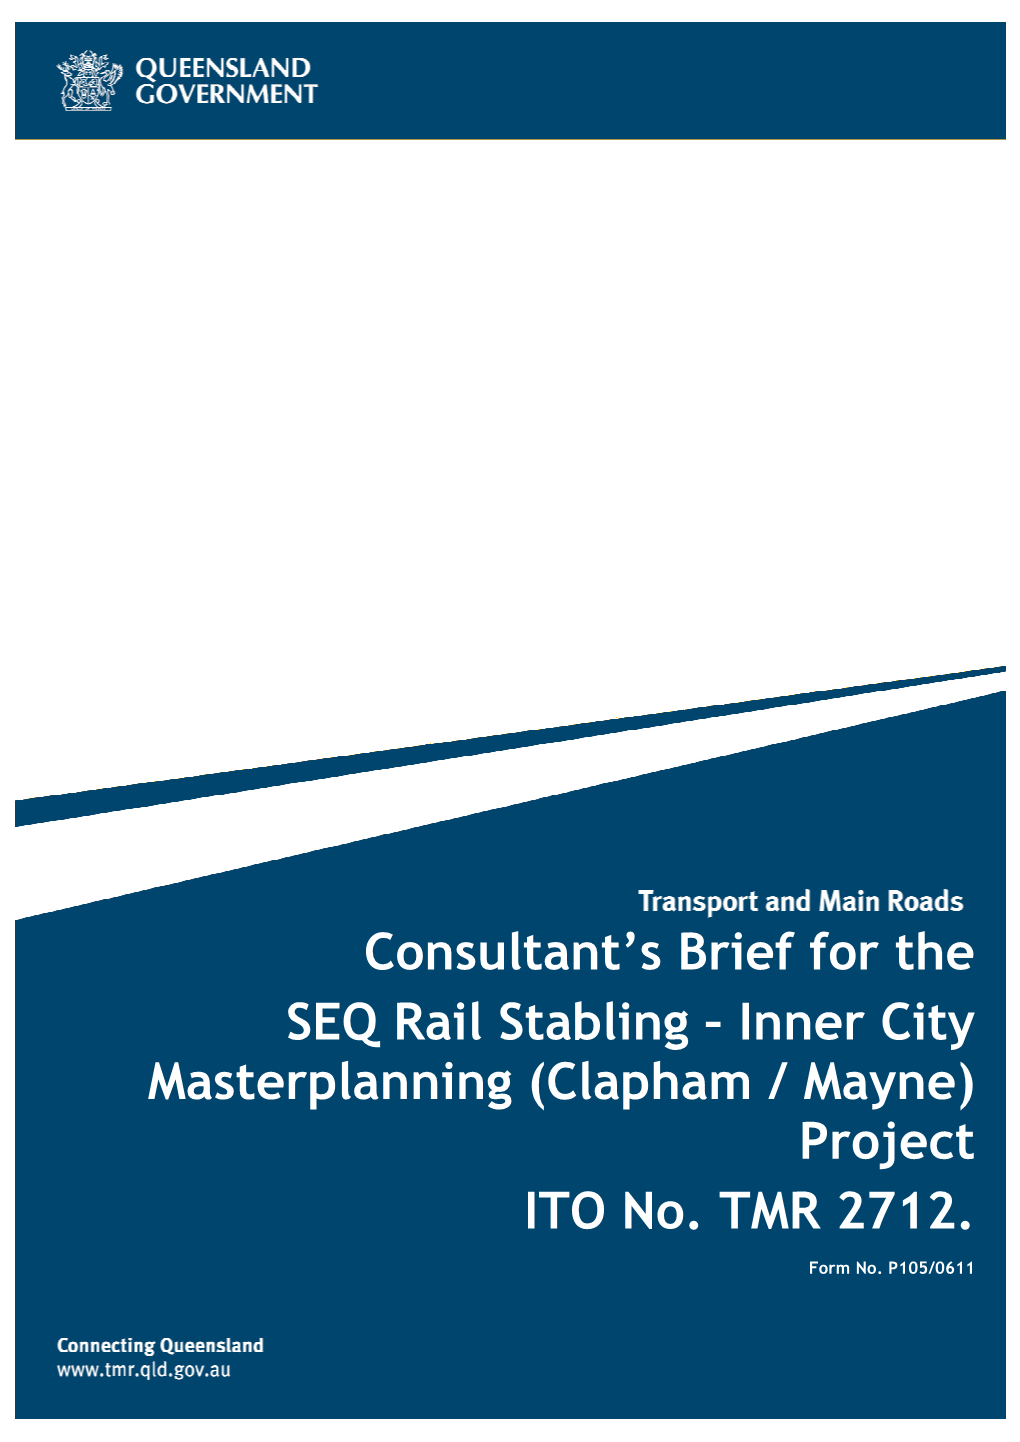 Inner City Masterplanning (Clapham / Mayne) Project ITO No. TMR 2712